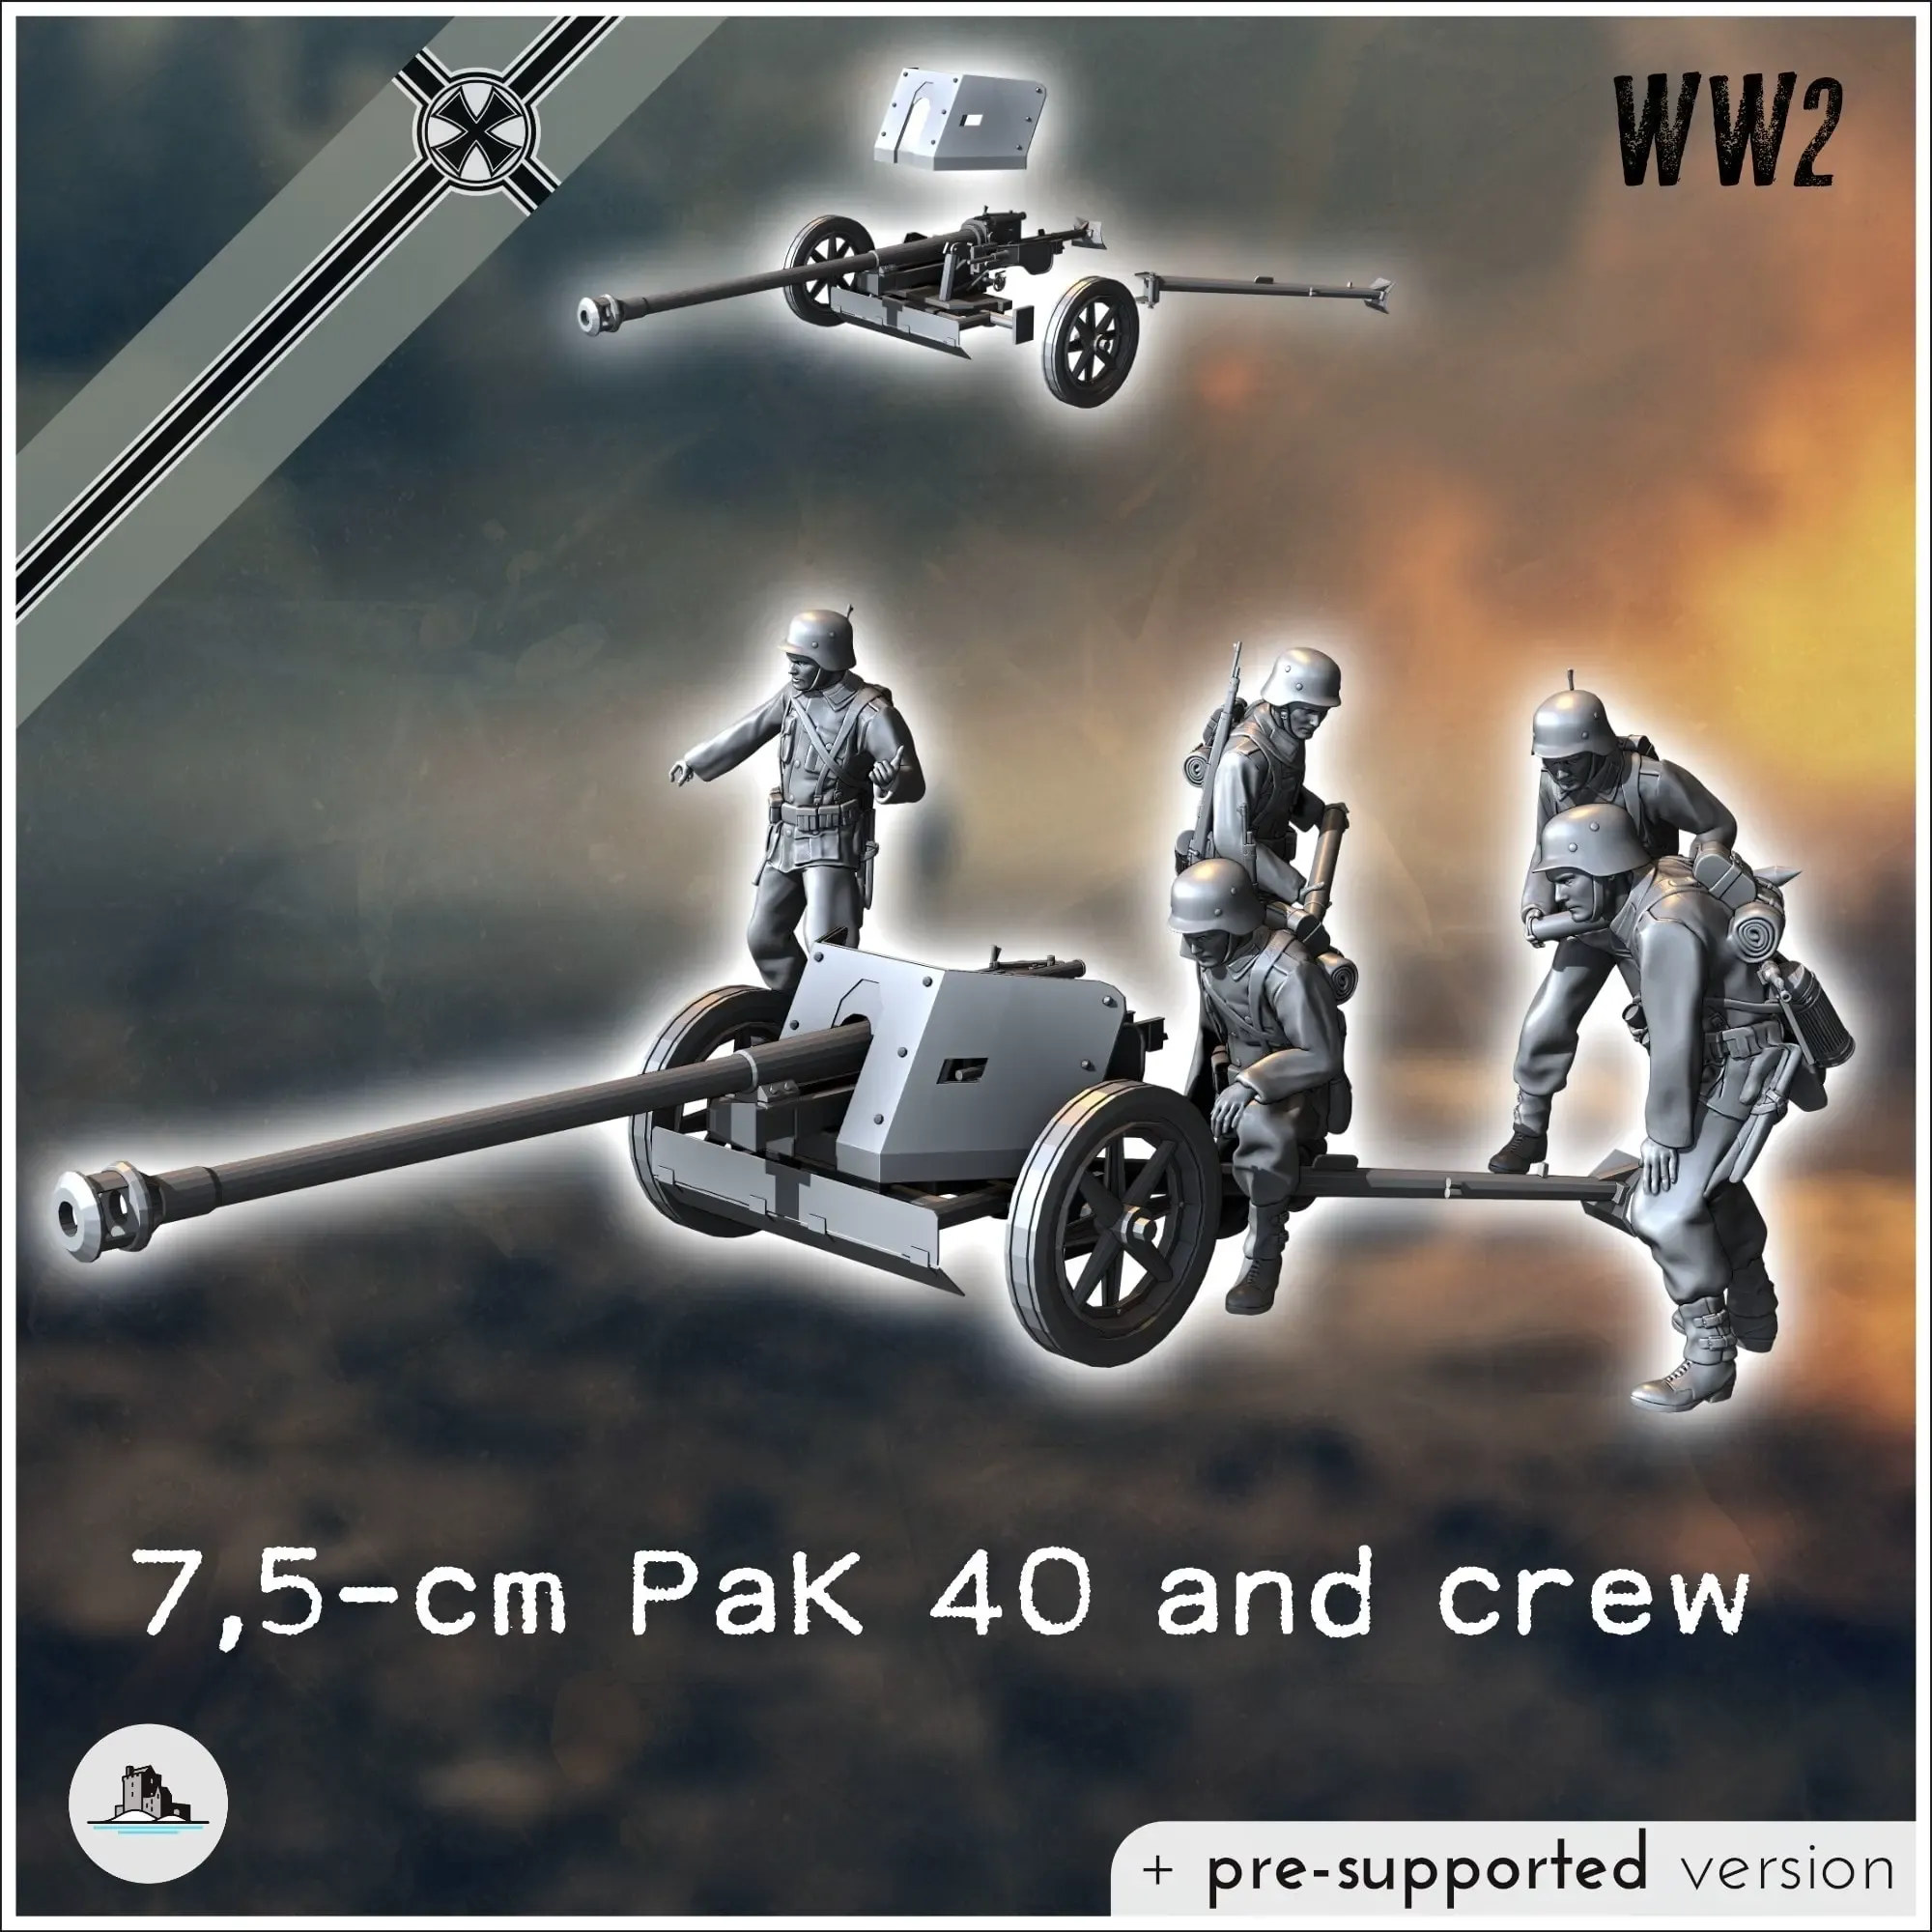 Pak 40 75mm anti-tank gun with five crew members - WW2 minia